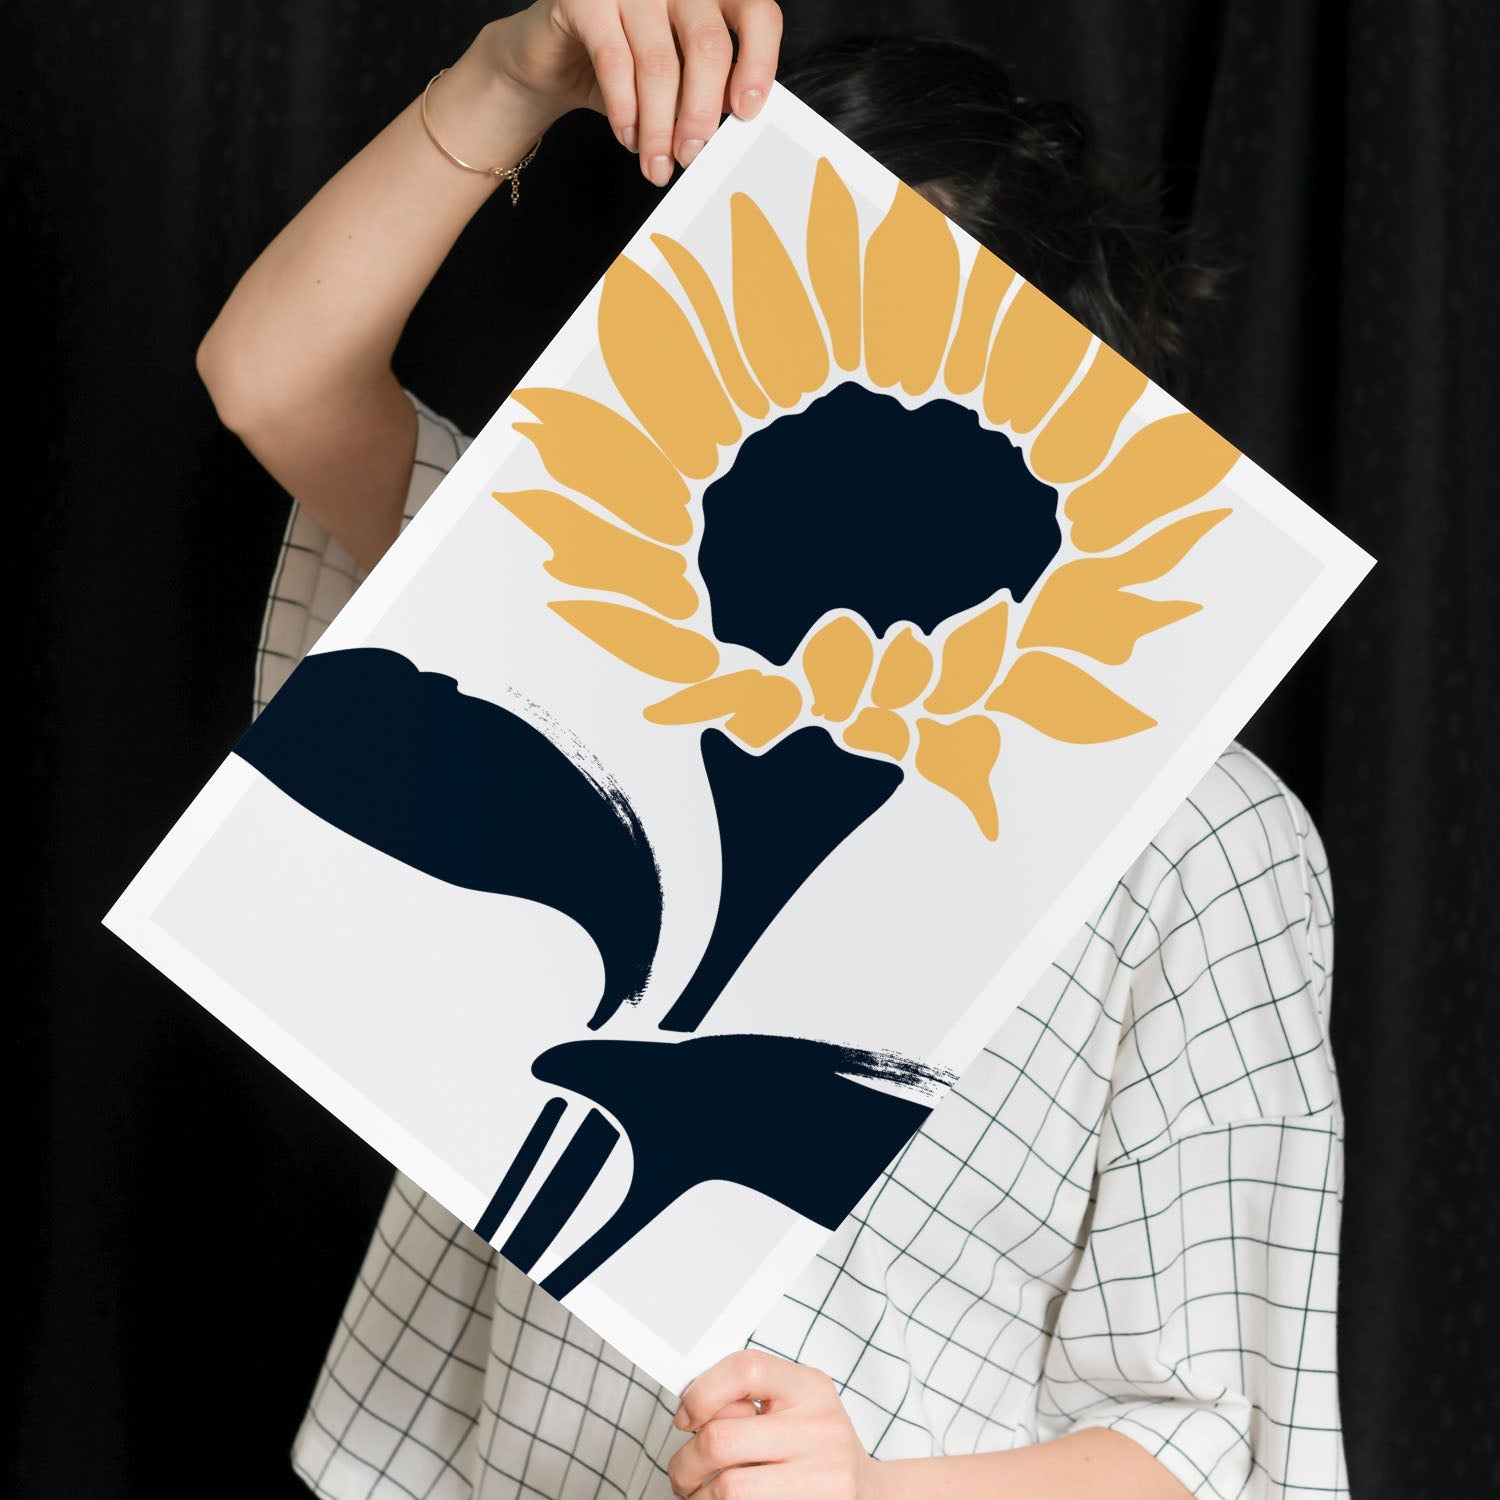 Sunflower-Artwork-Nacnic-Nacnic Estudio SL